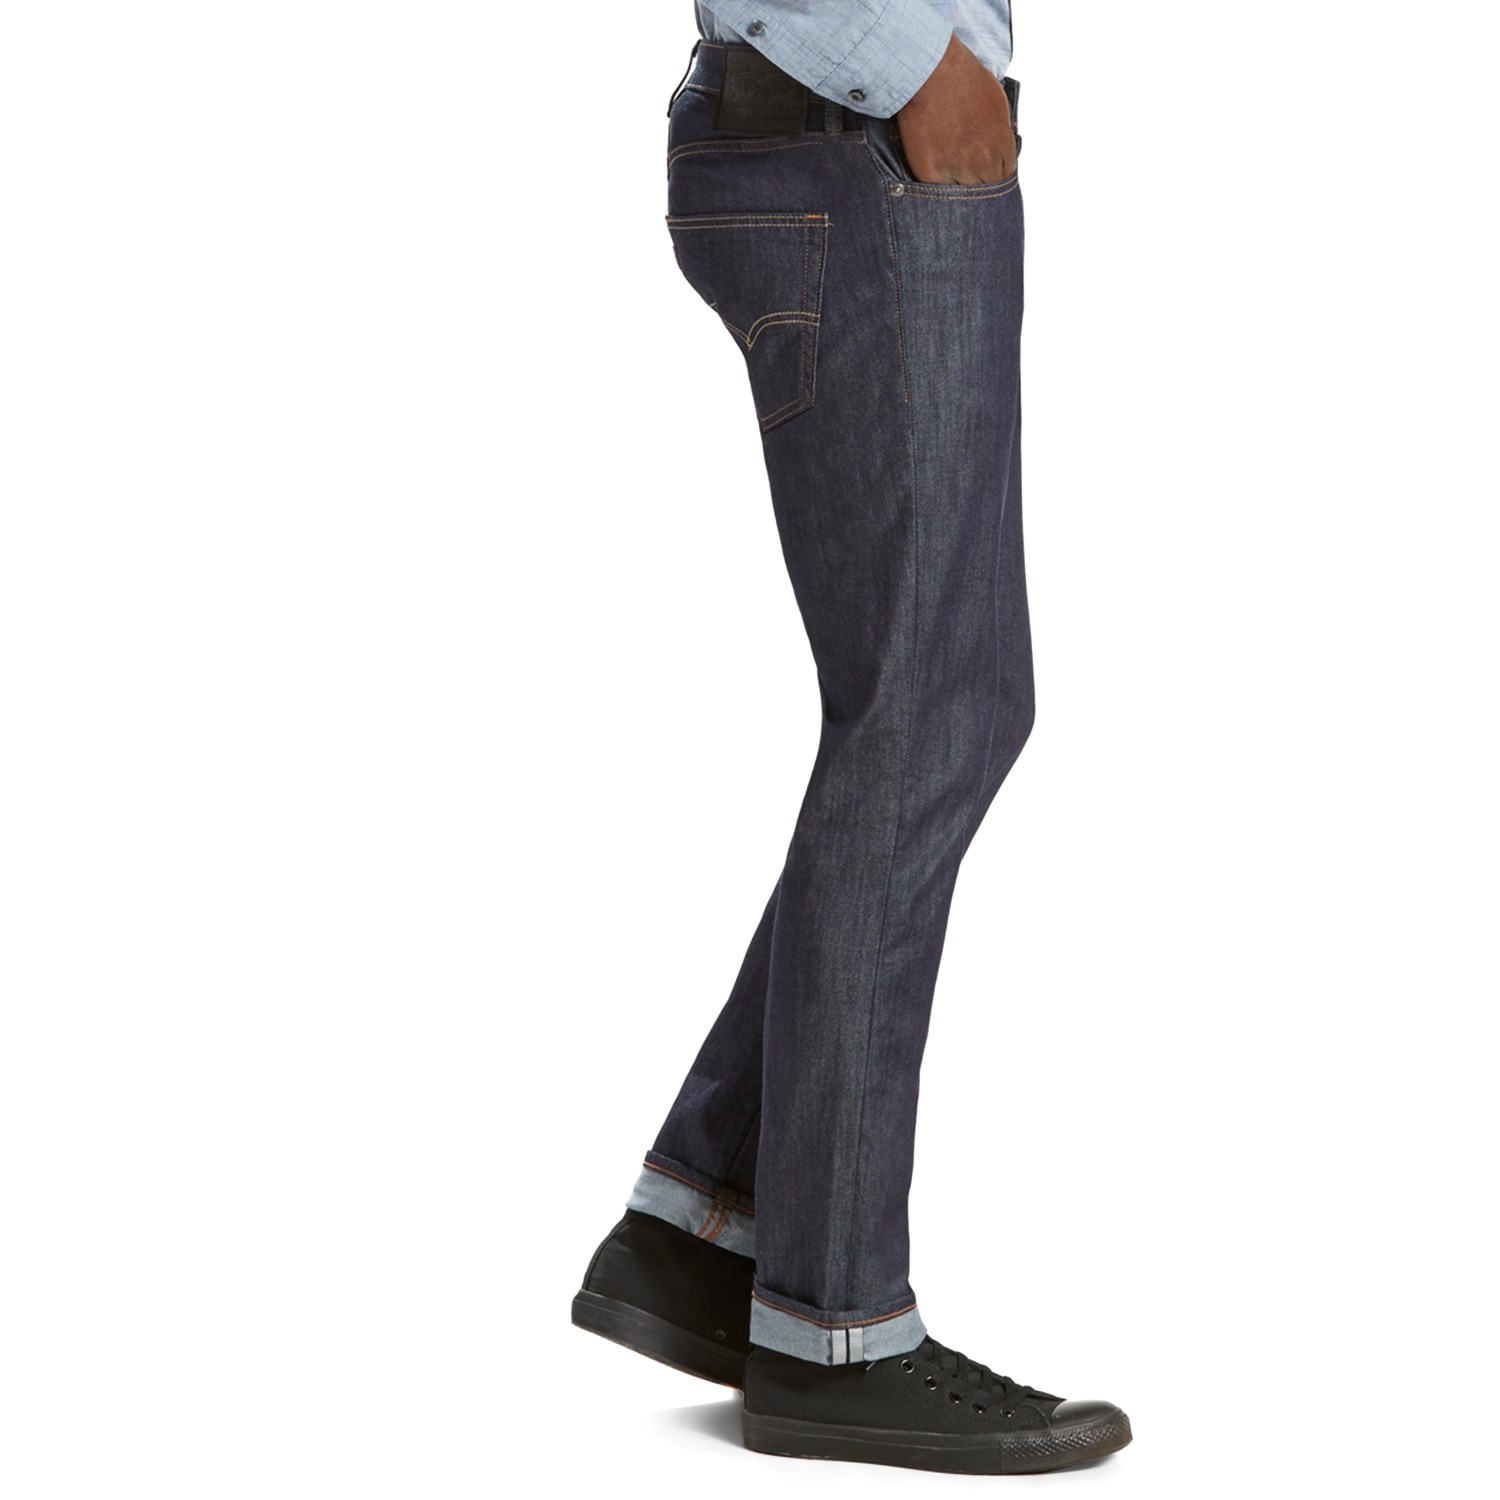 Levi's Commuter 511™ Slim Fit Jeans | evo